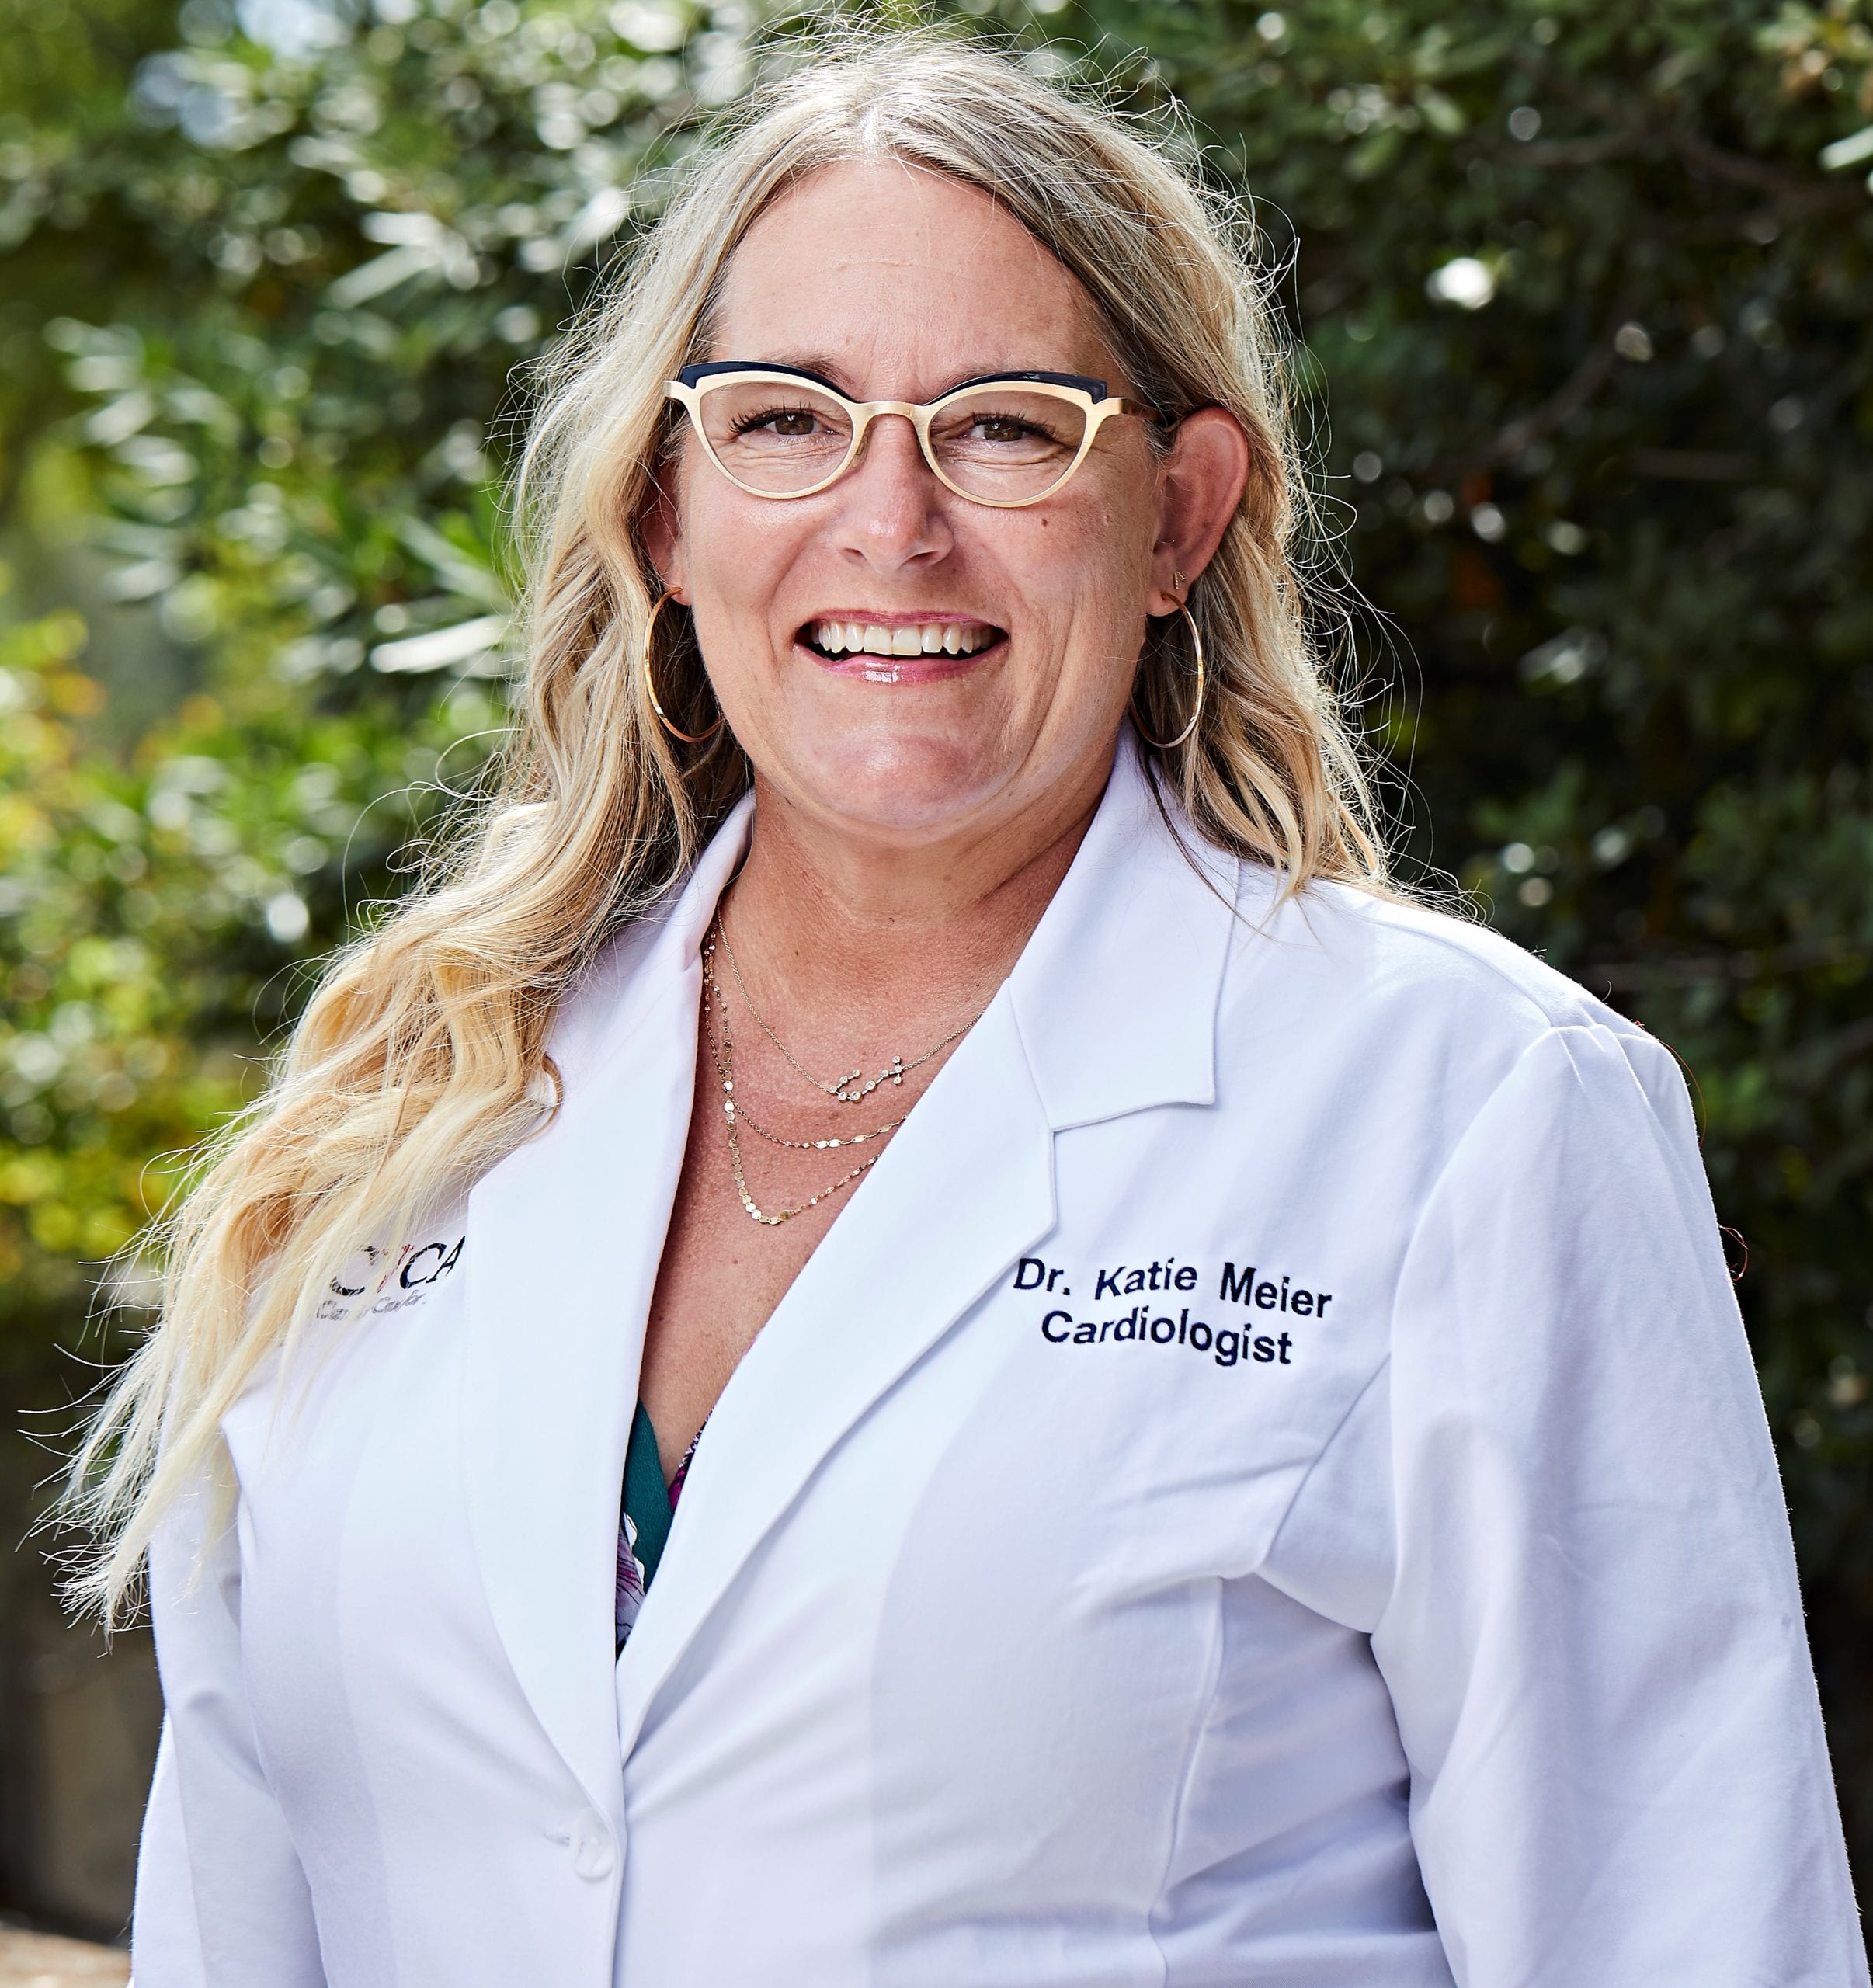 Dr. Katie Meier